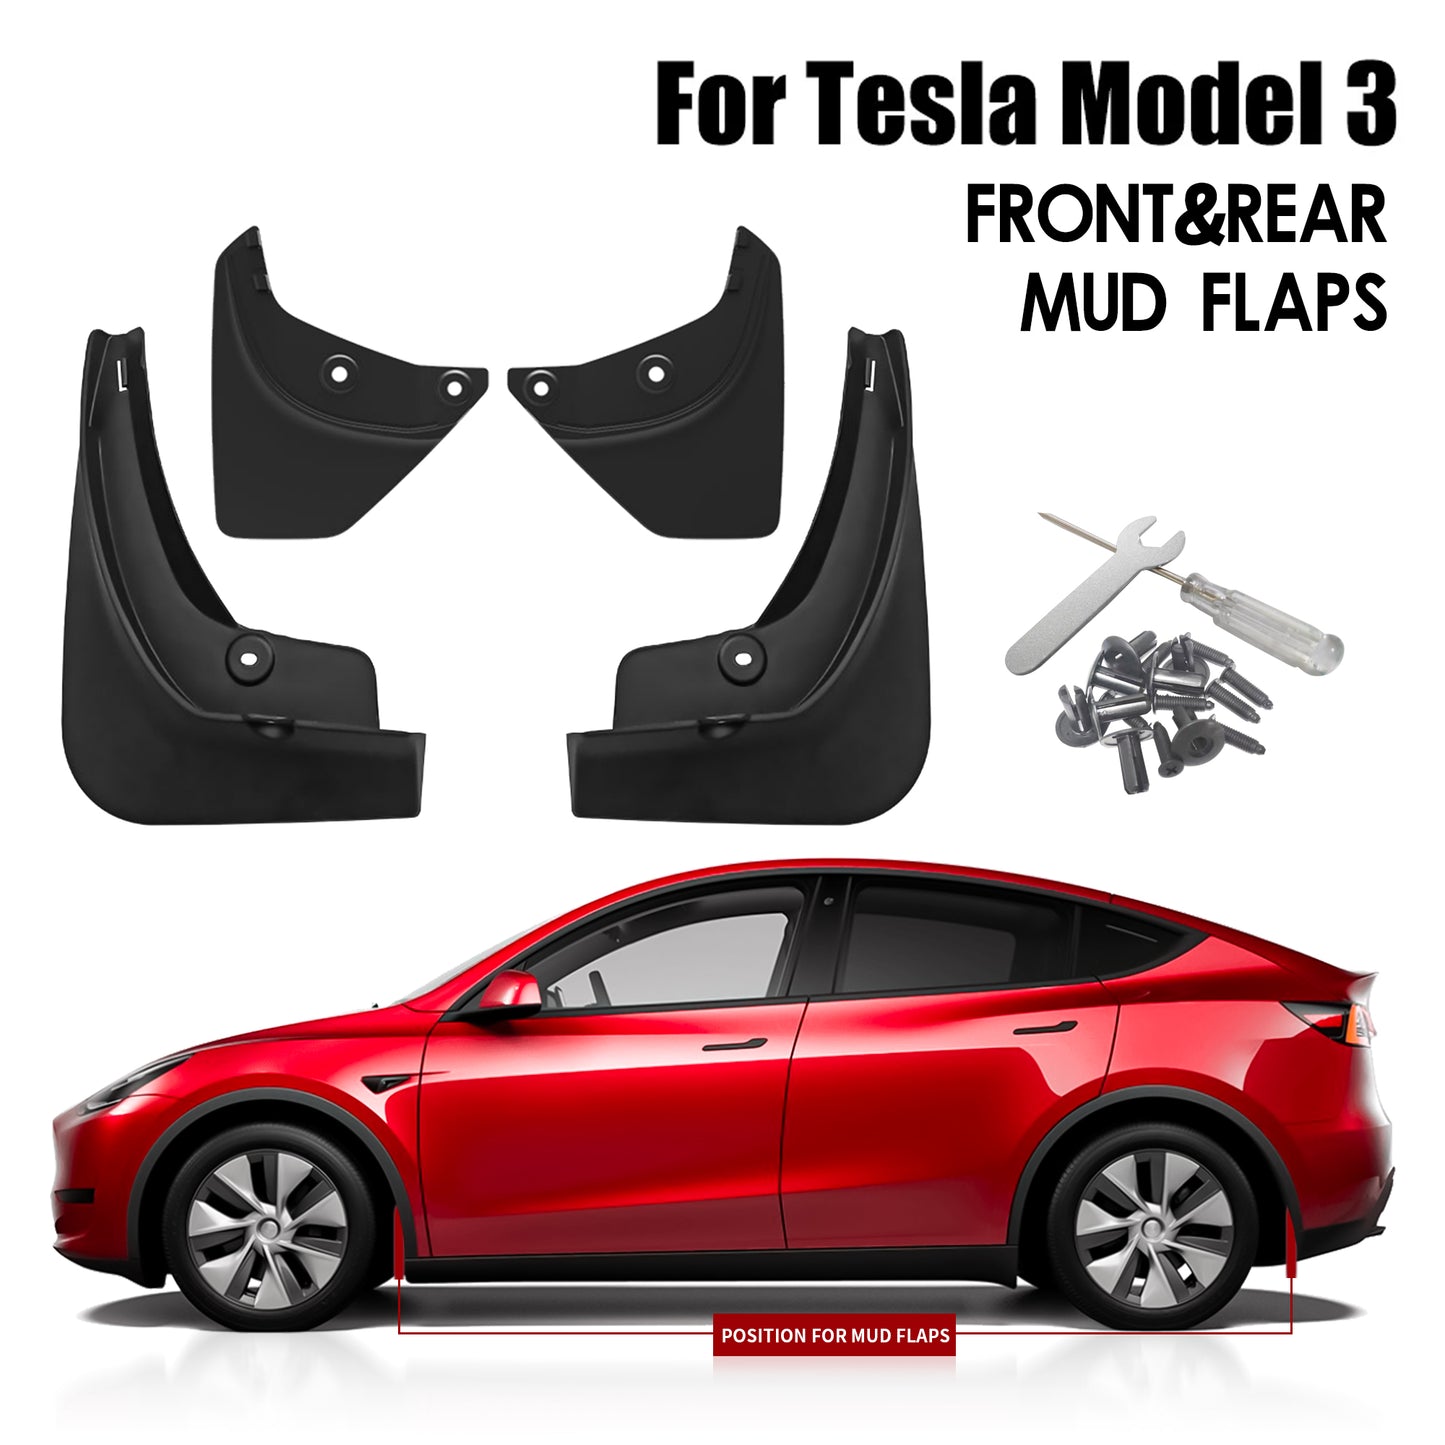 Arcoche Tesla Model 3 Mud Flaps fit 2021 - 2022 Accessories for Fender Splash Guards without Drilling (Set of Four, Matte Black)